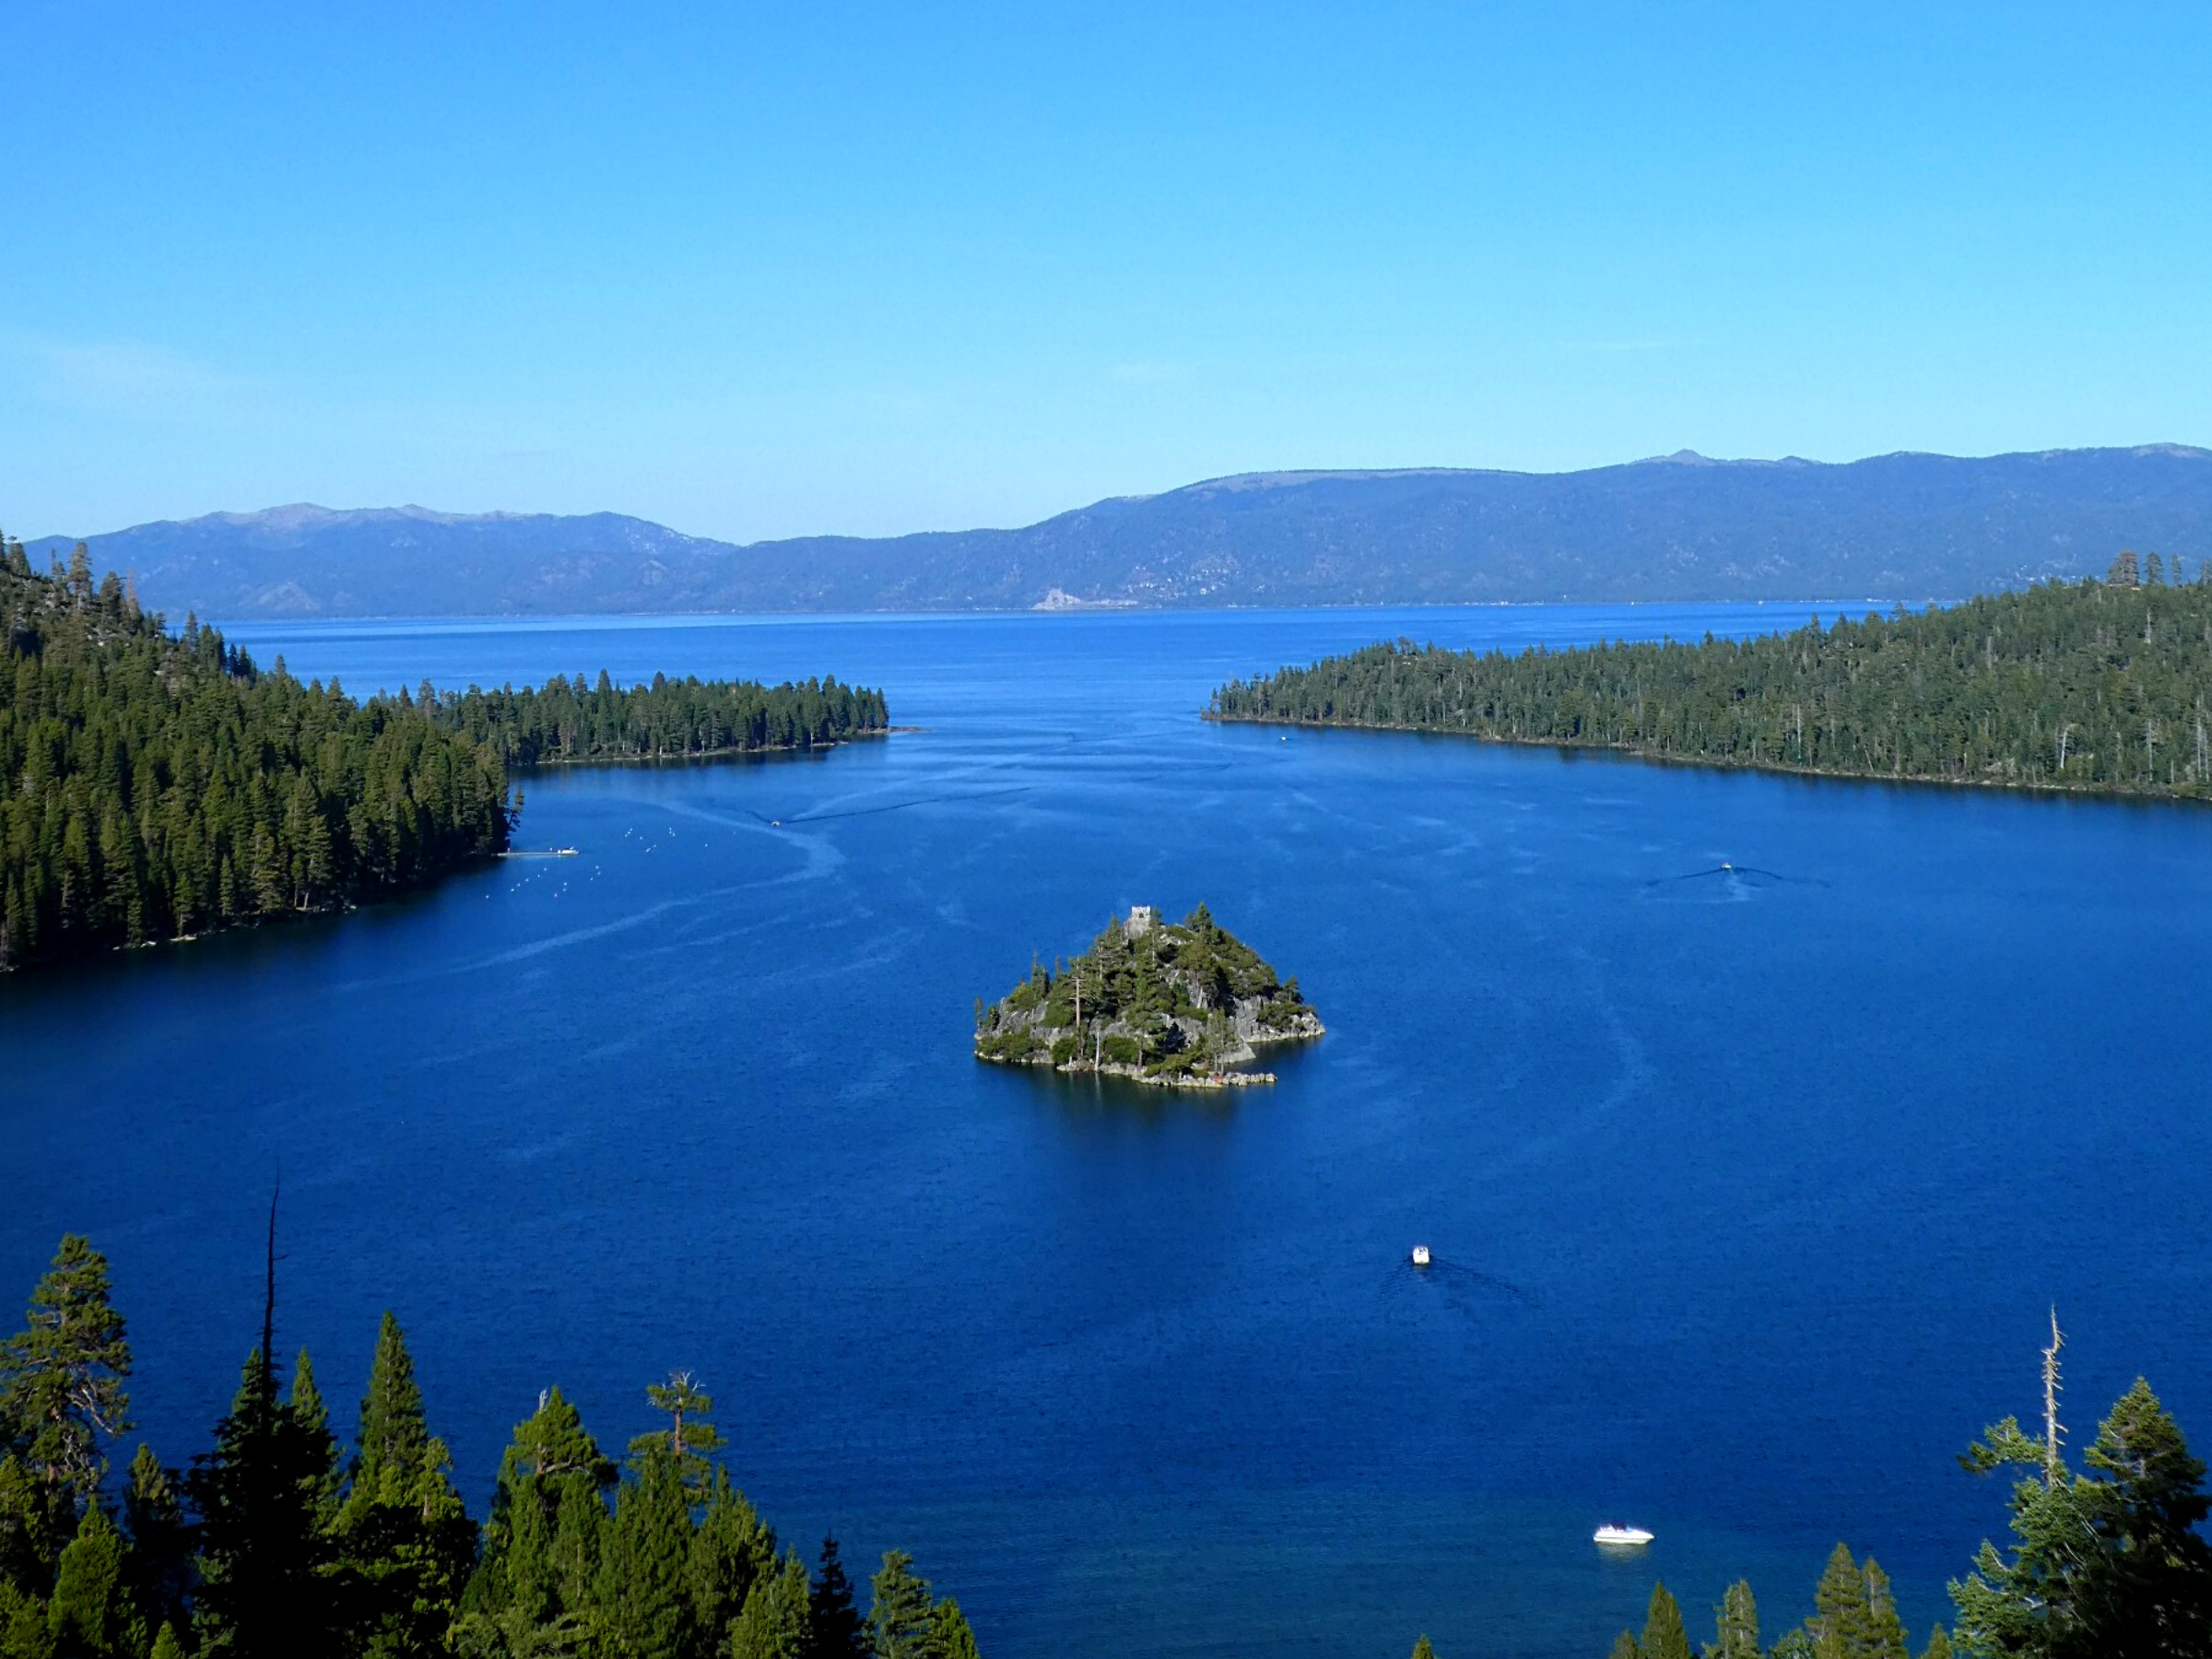 Lake Tahoe Featured Image Emerald Bay copyright he said or she said